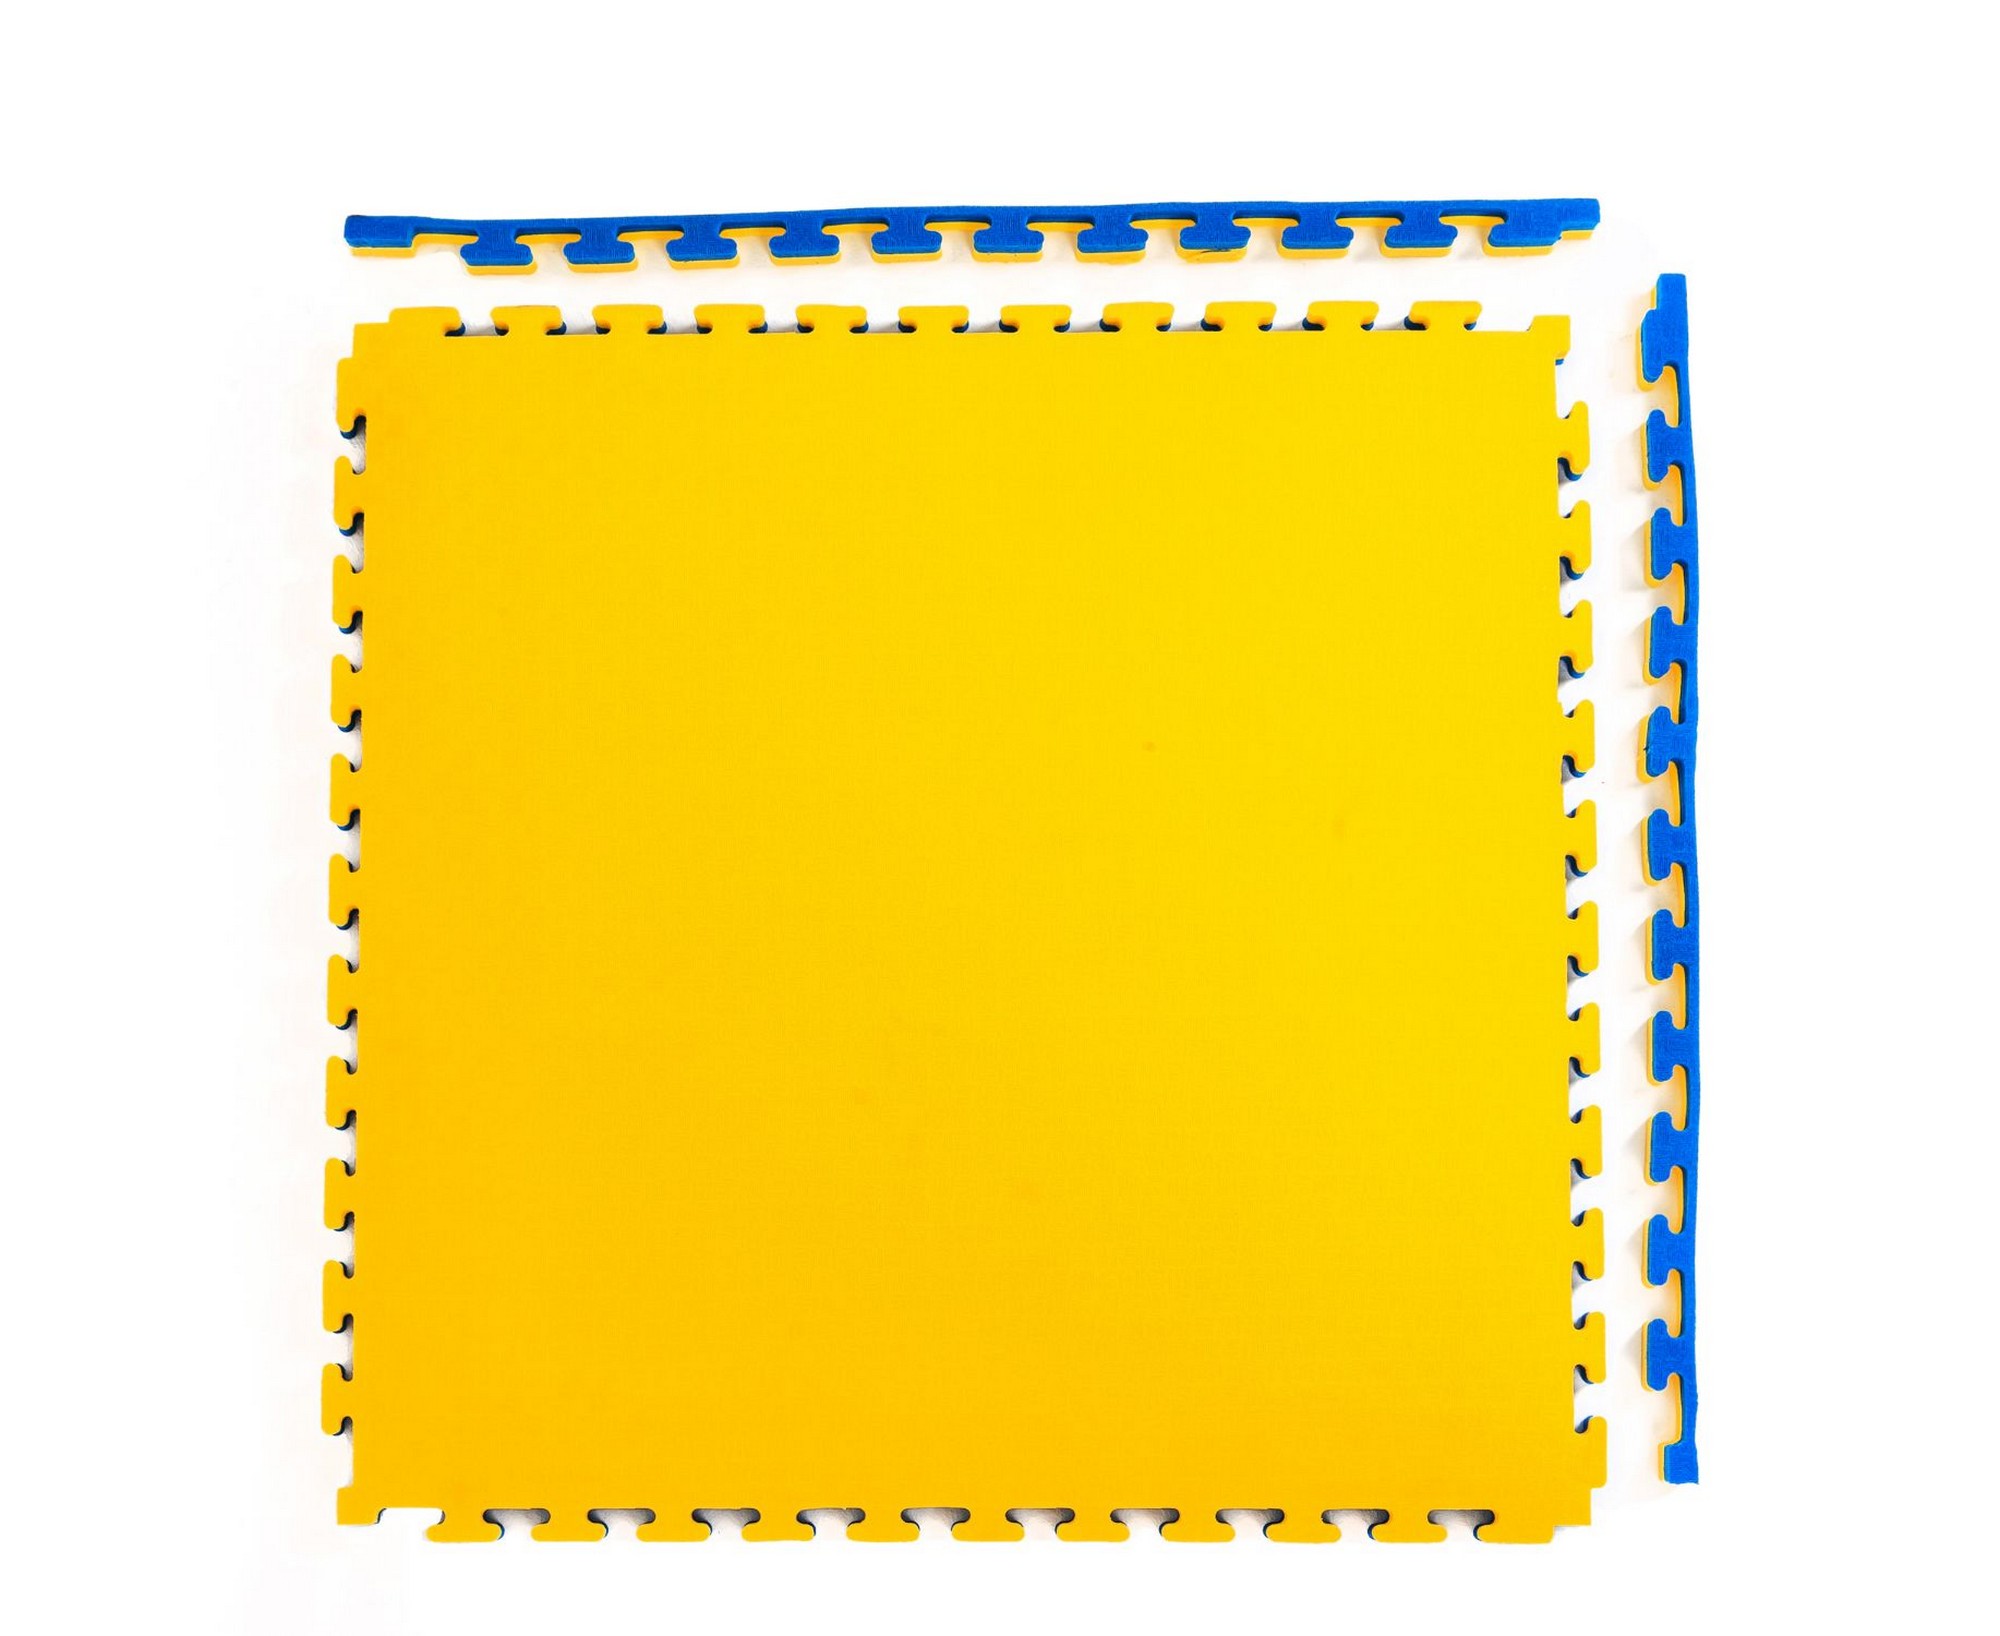 фото Будо-мат, 100 x 100 см, 40 мм dfc 12284 сине-жёлтый